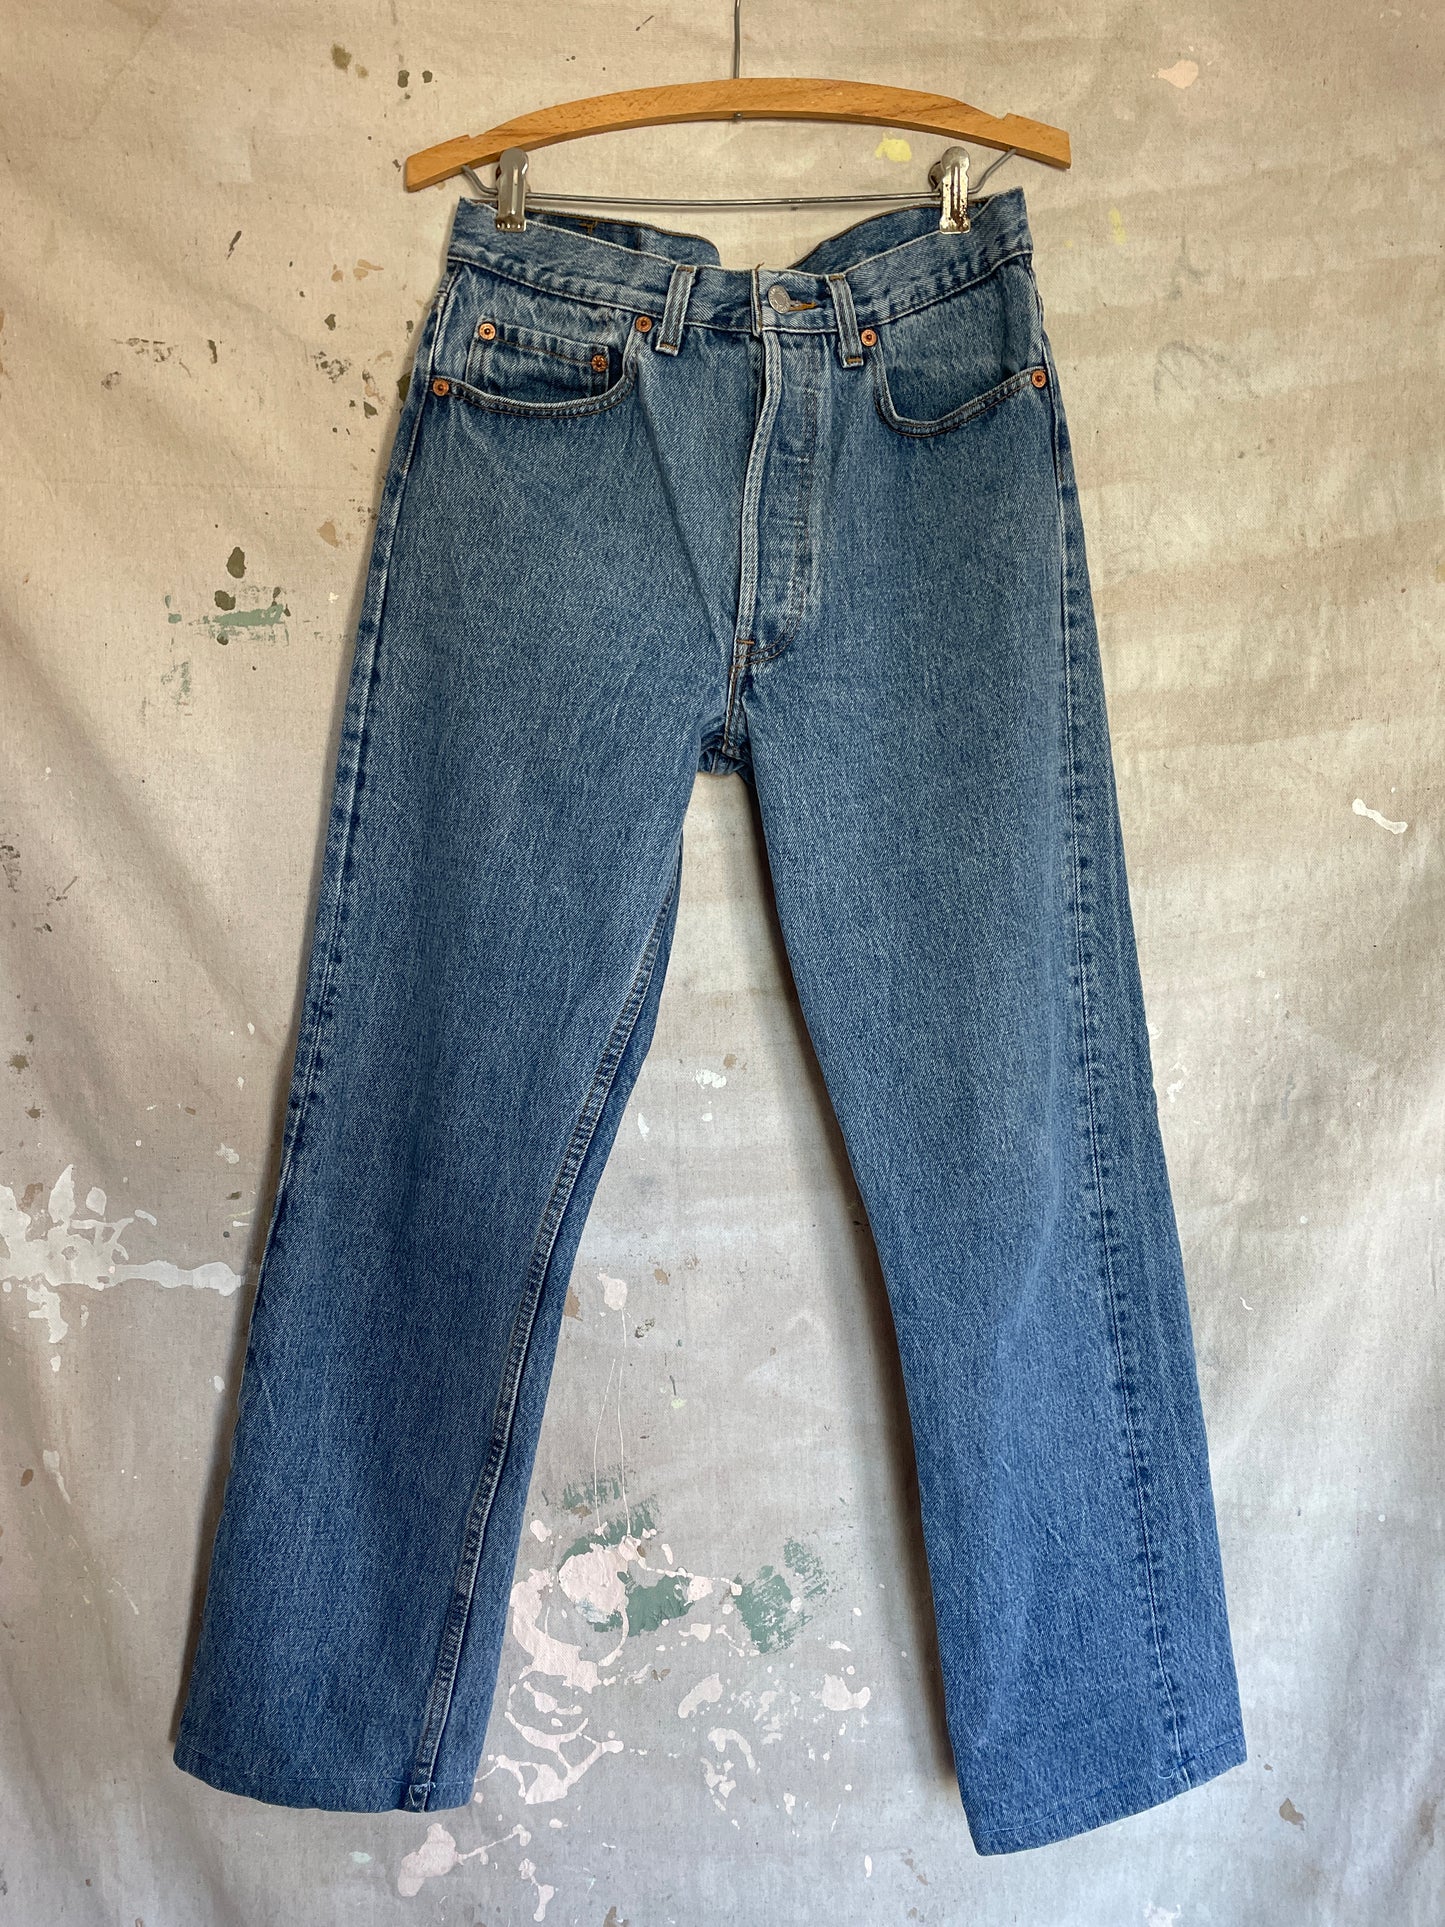 90s Levi’s 501 Jeans